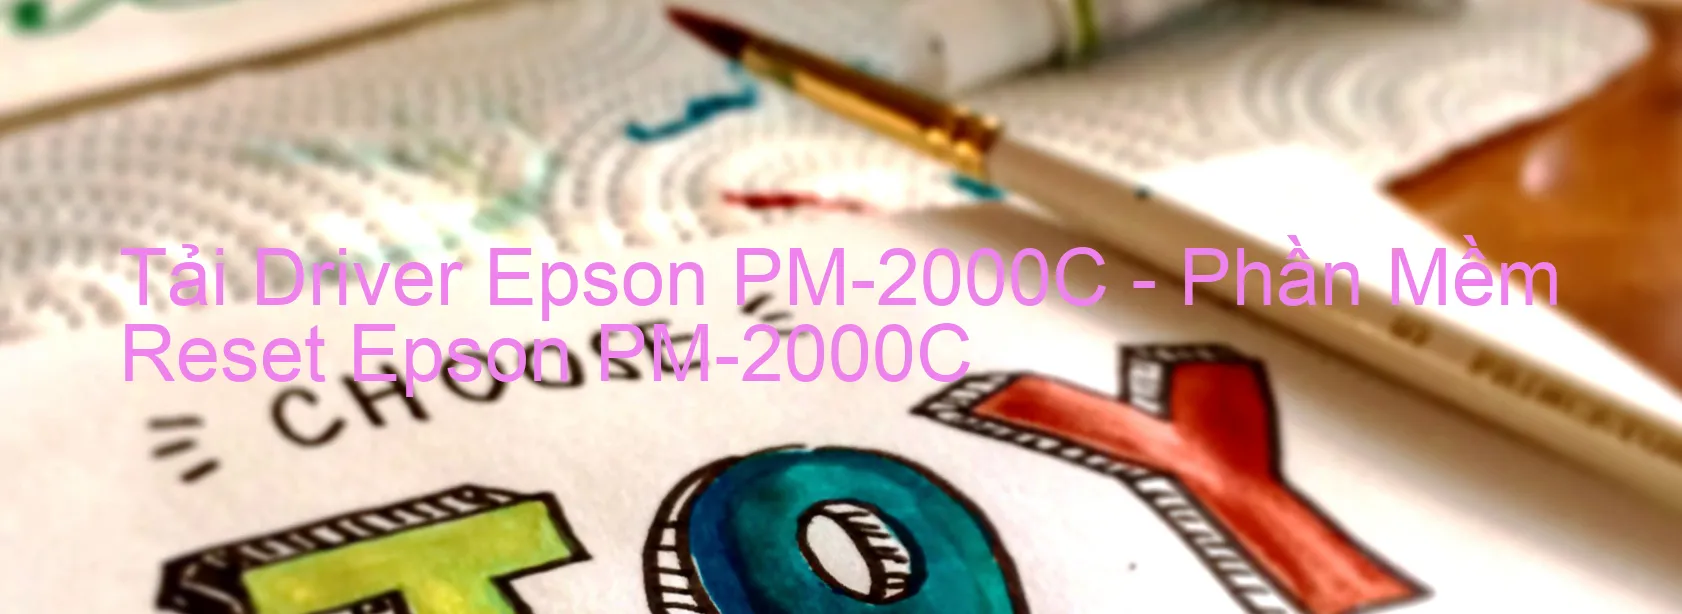 Driver Epson PM-2000C, Phần Mềm Reset Epson PM-2000C